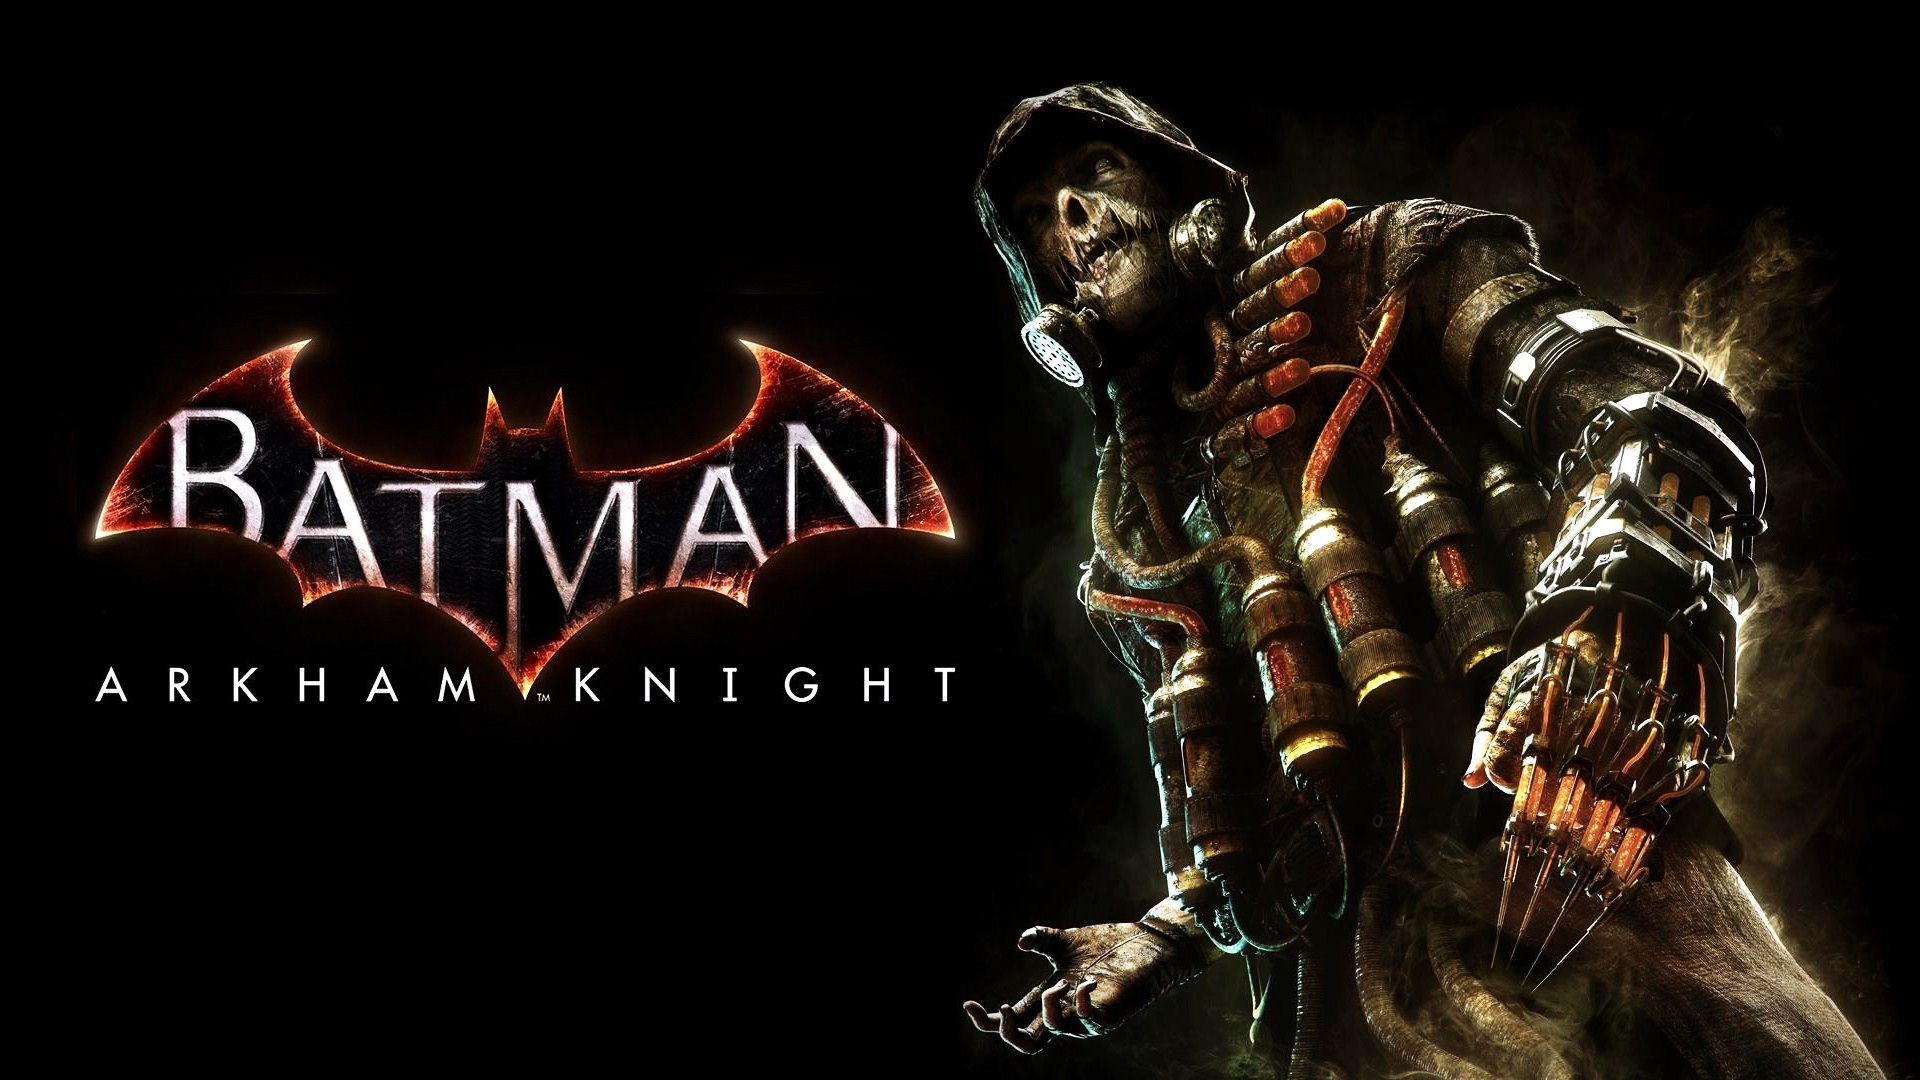 Batman, Batman: Arkham Knight, Rocksteady Studios, Gotham City, Scarecrow (character), Video Games Wallpaper